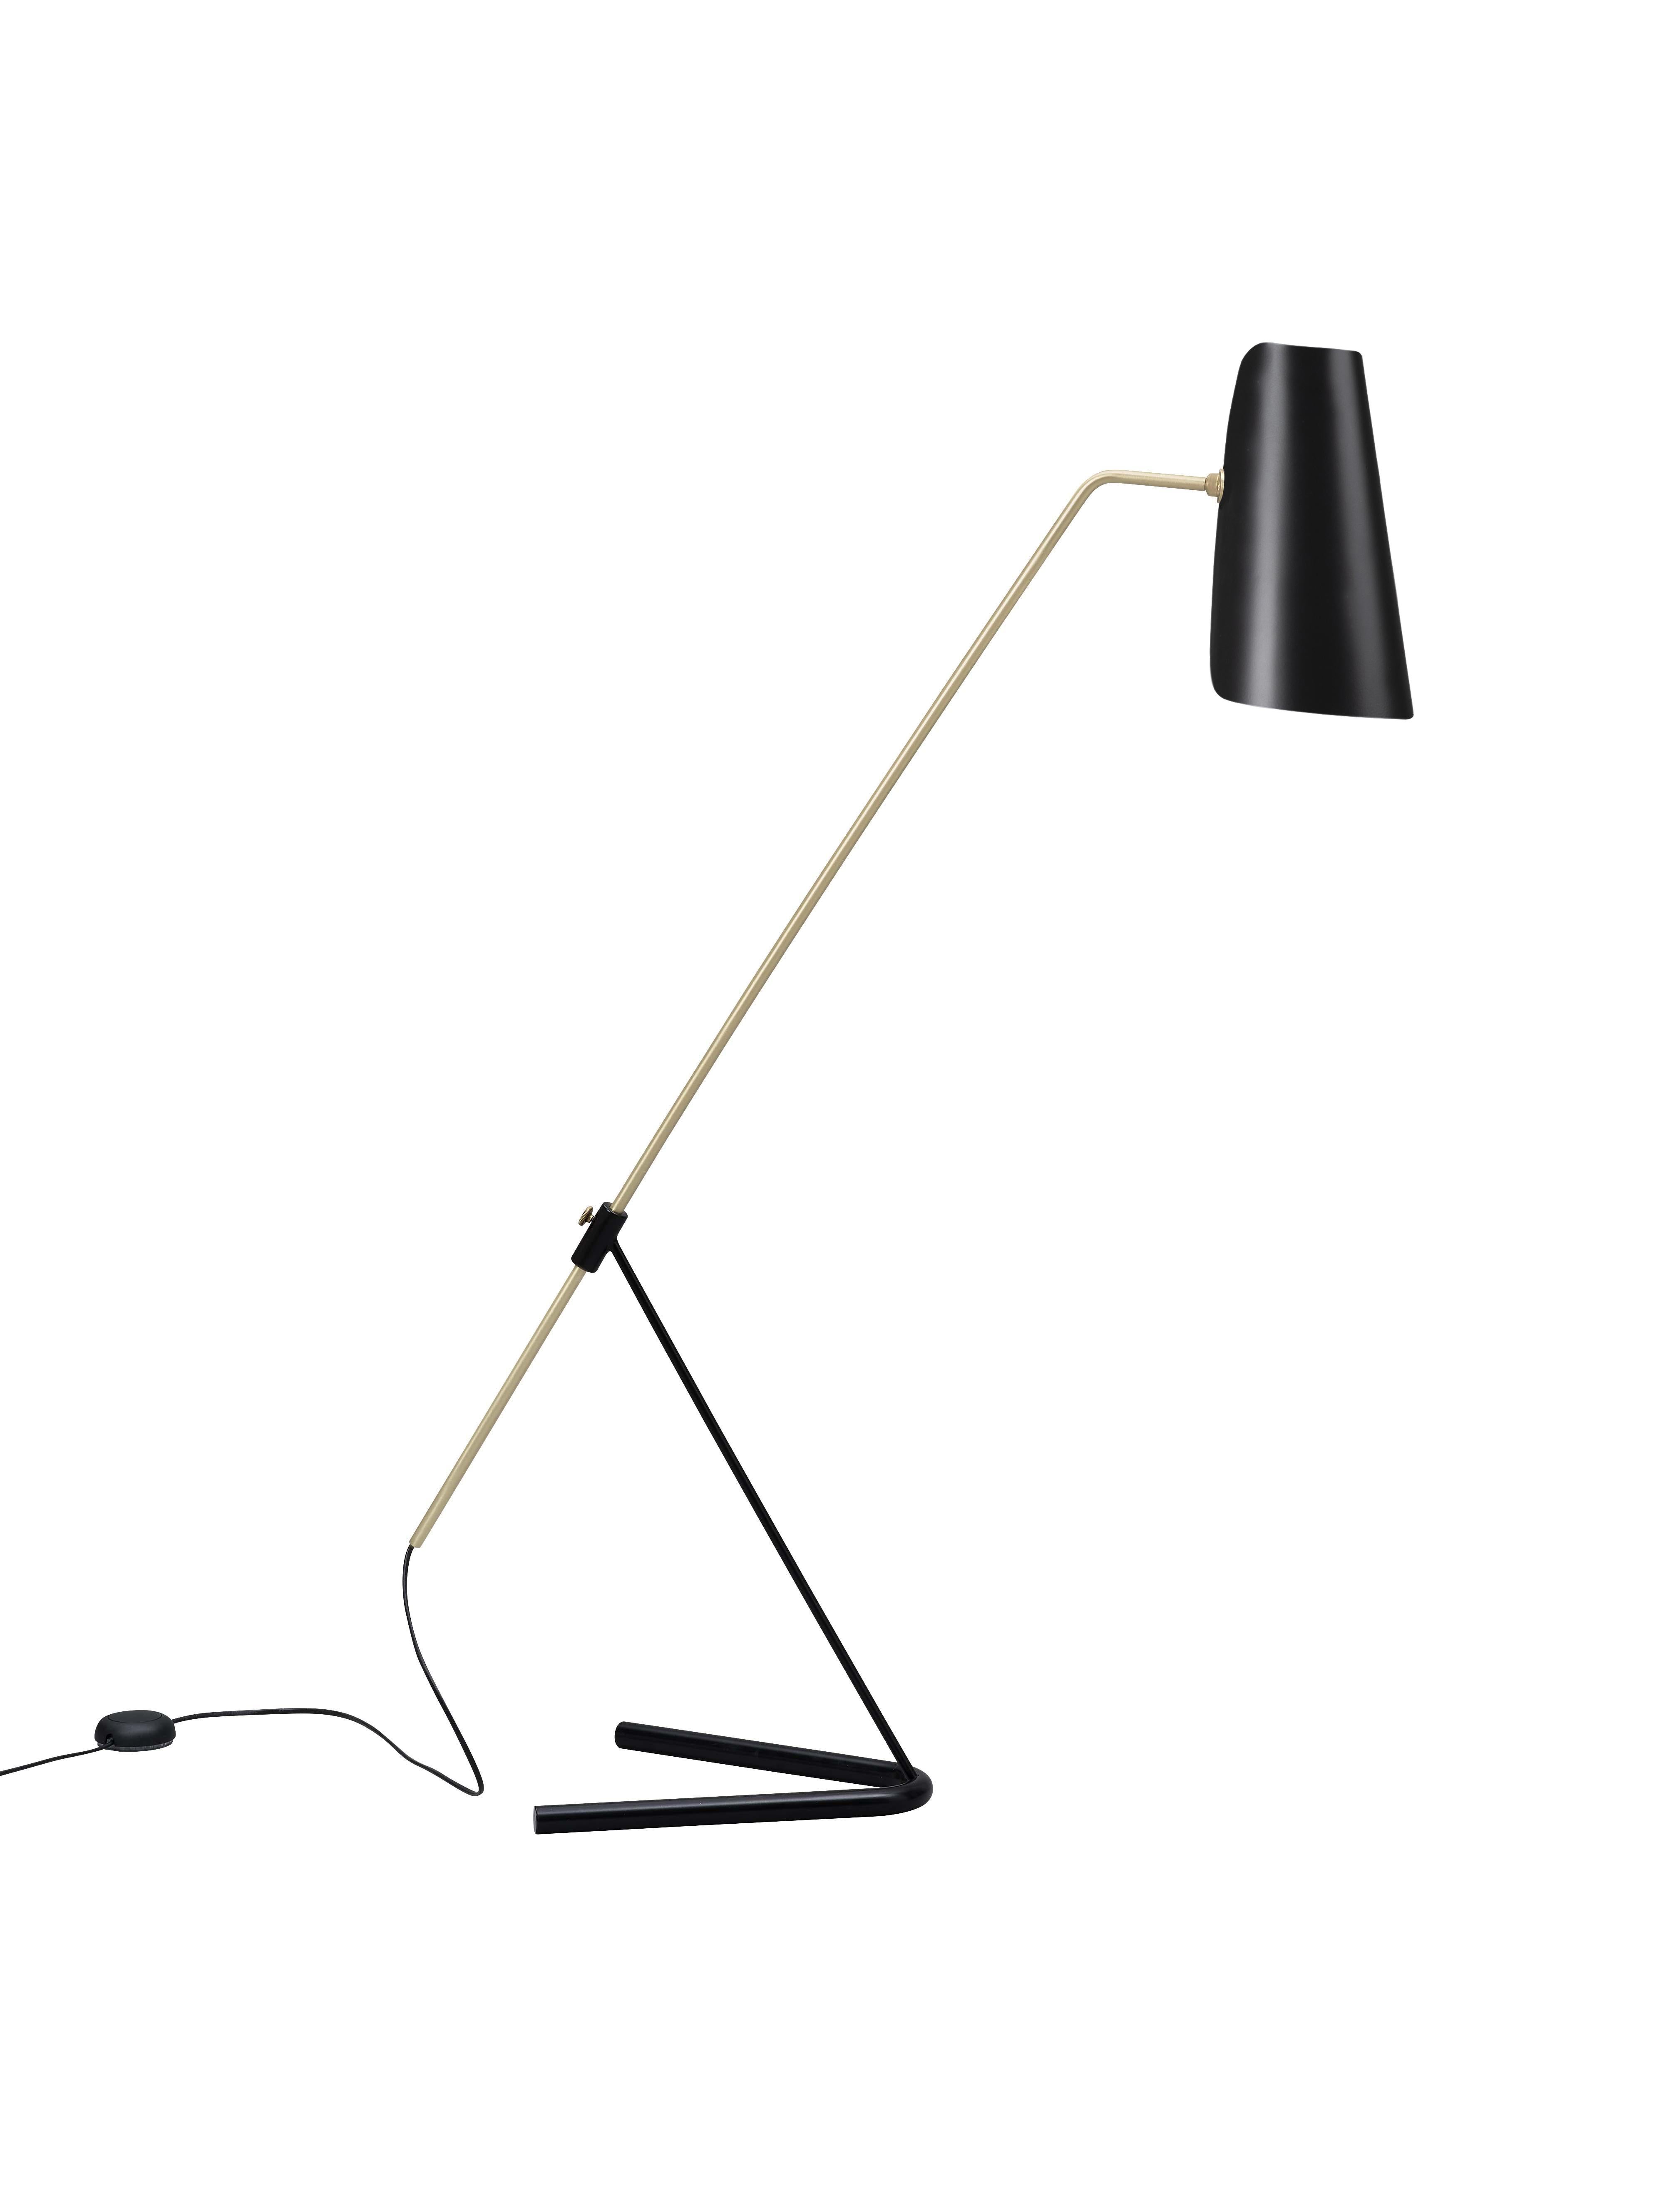 Pierre Guariche 'G21' Adjustable Floor Lamp for Sammode Studio in Black In New Condition For Sale In Glendale, CA